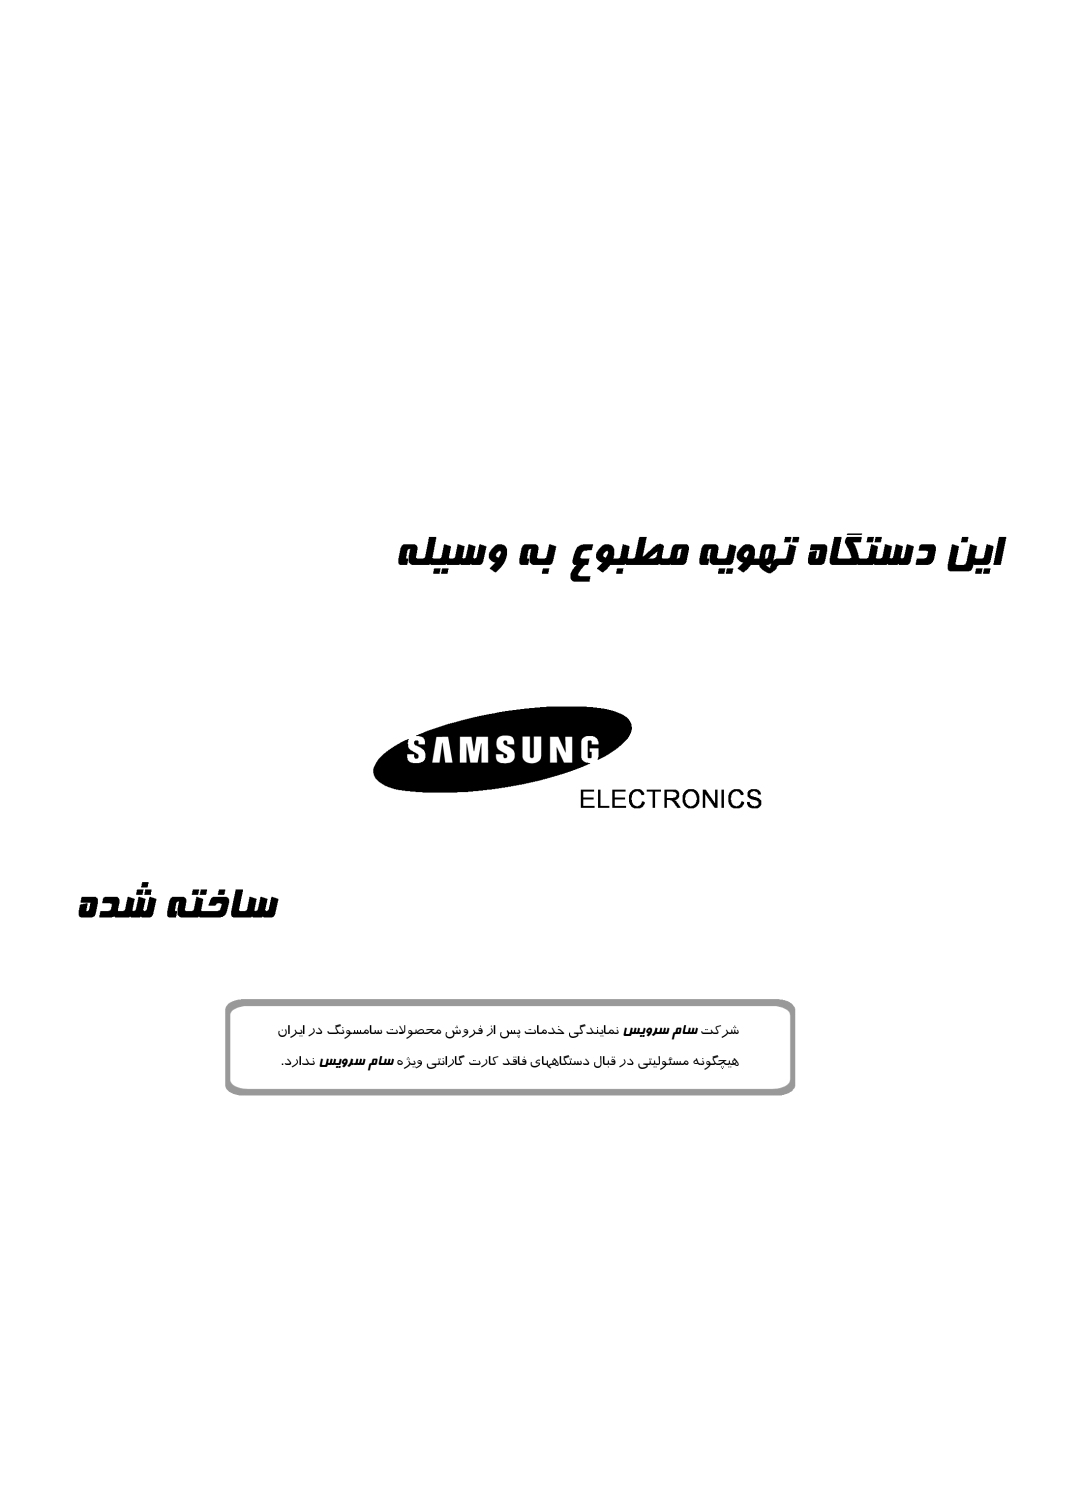 Samsung AST24S6GEA/MID, AST24S6GEA-HAC, AST12S4GE-HAC, AST12S4GE-MID ﻪﻠﯿﺳو ﻪﺑ عﻮﺒﻄﻣ ﻪﯾﻮﻬﺗ هﺎﮕﺘﺳد ﻦﯾا, هﺪﺷ ﻪﺘﺧﺎﺳ, Electronics 